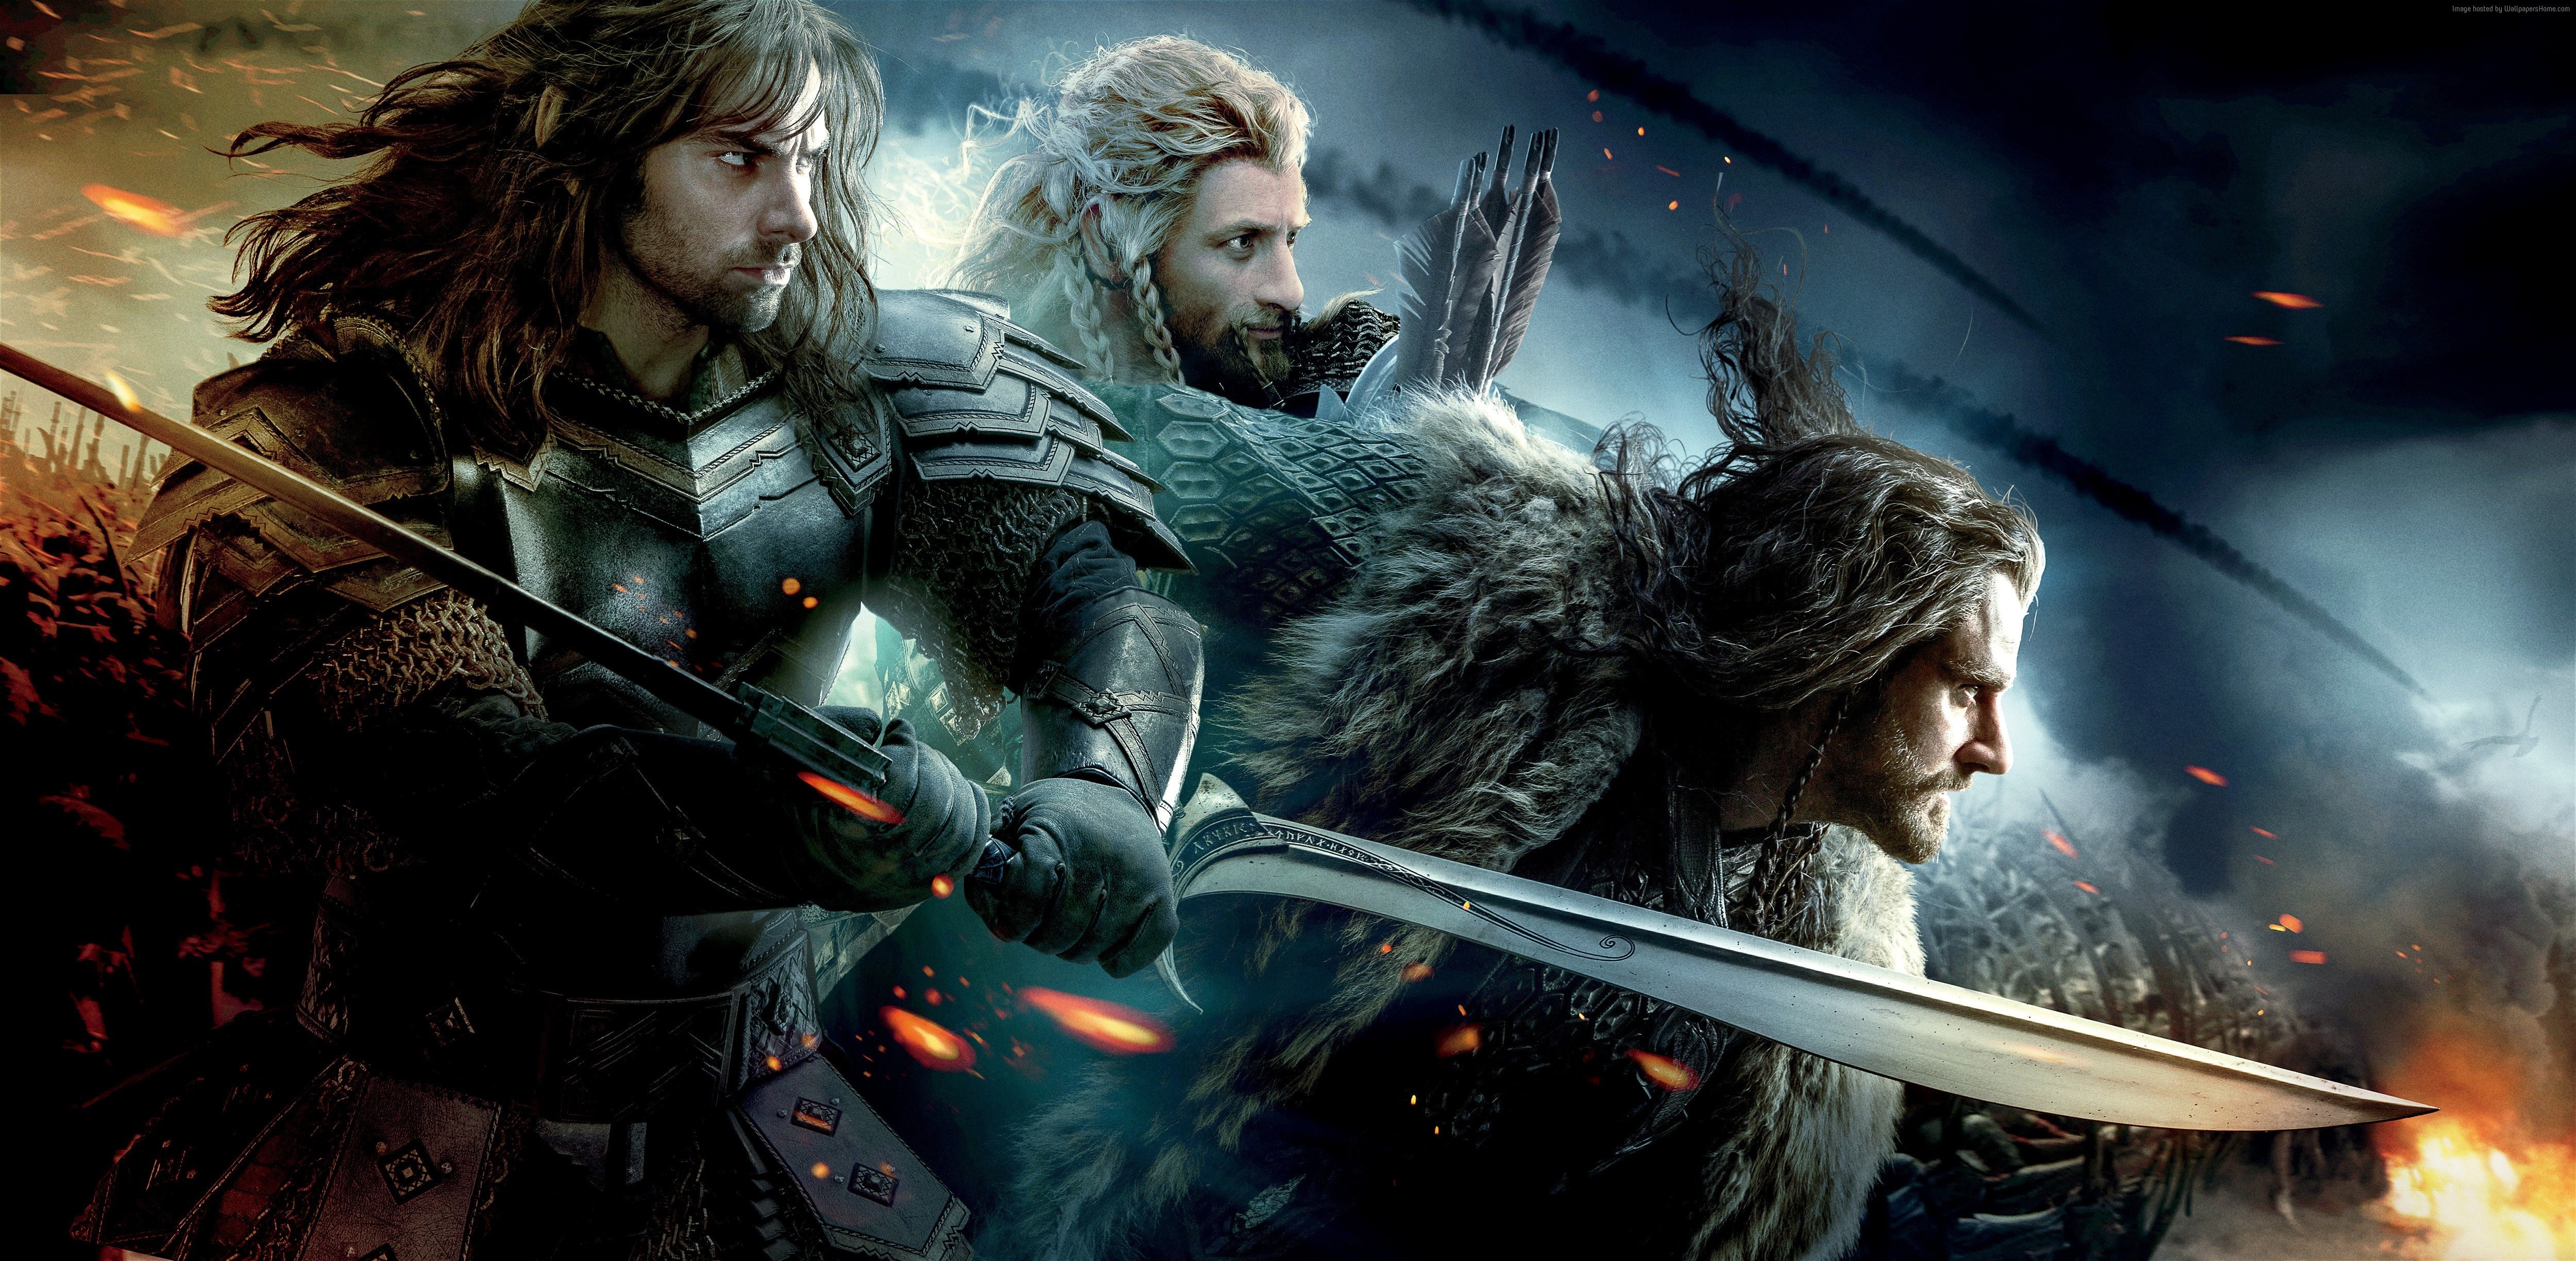 Hobbit Fili Kili And Thorin